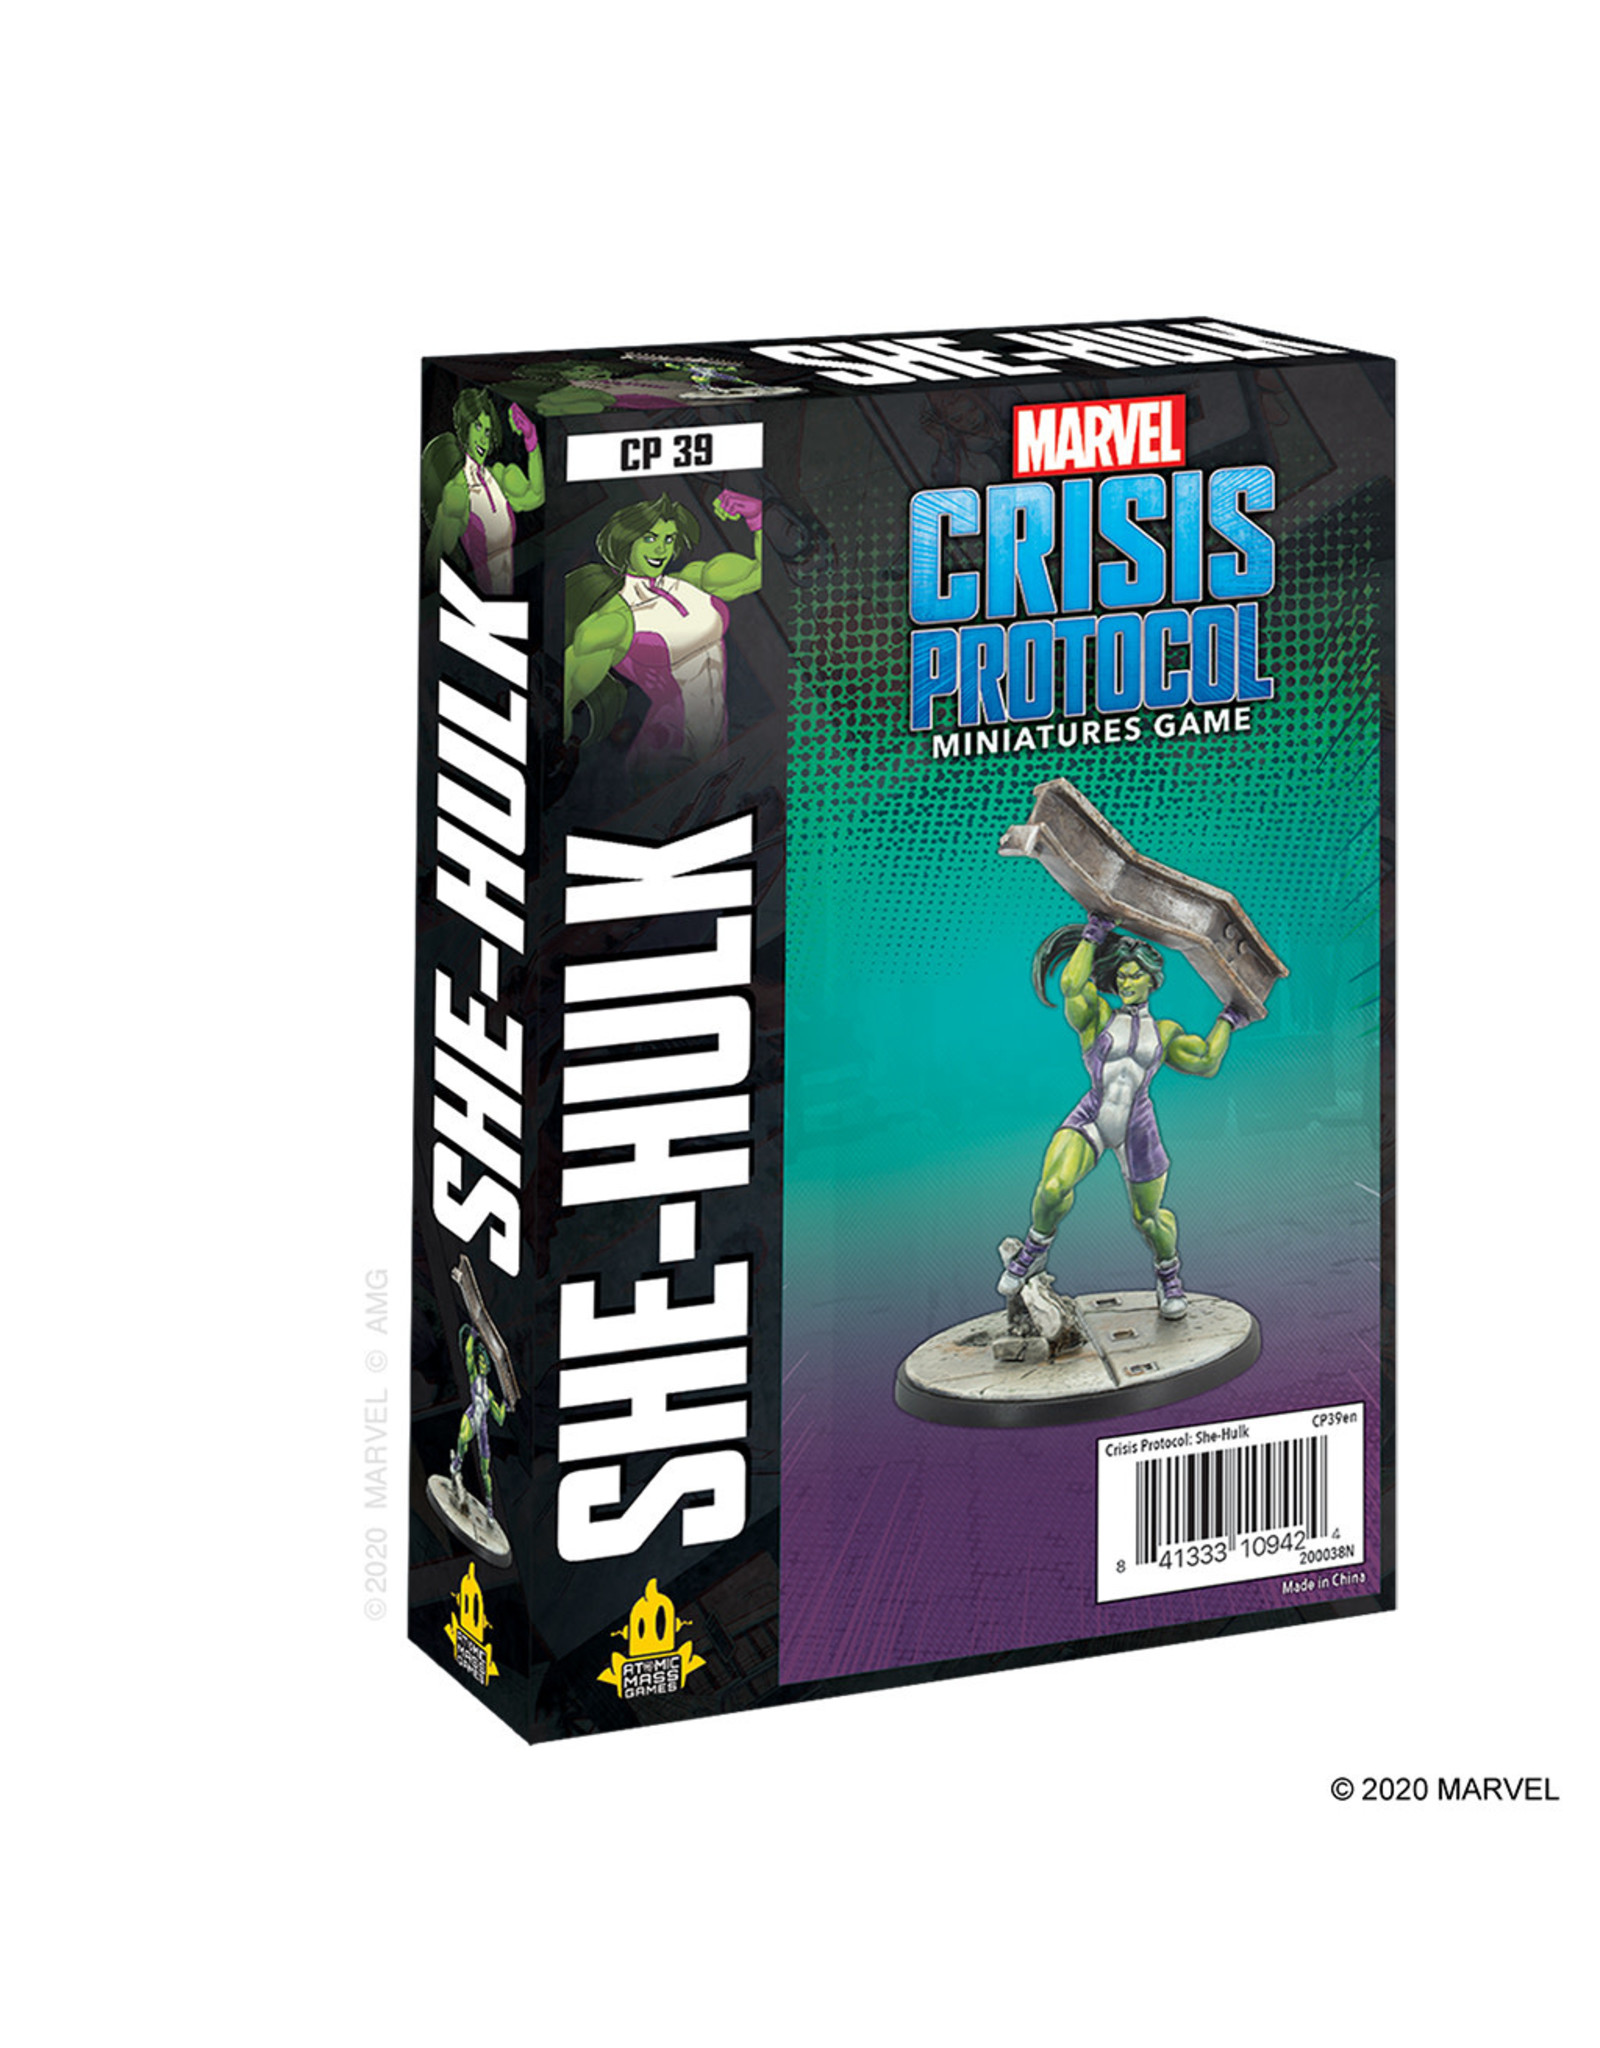 Atomic Mass Games She Hulk Character Pack - Marvel Crisis Protocol